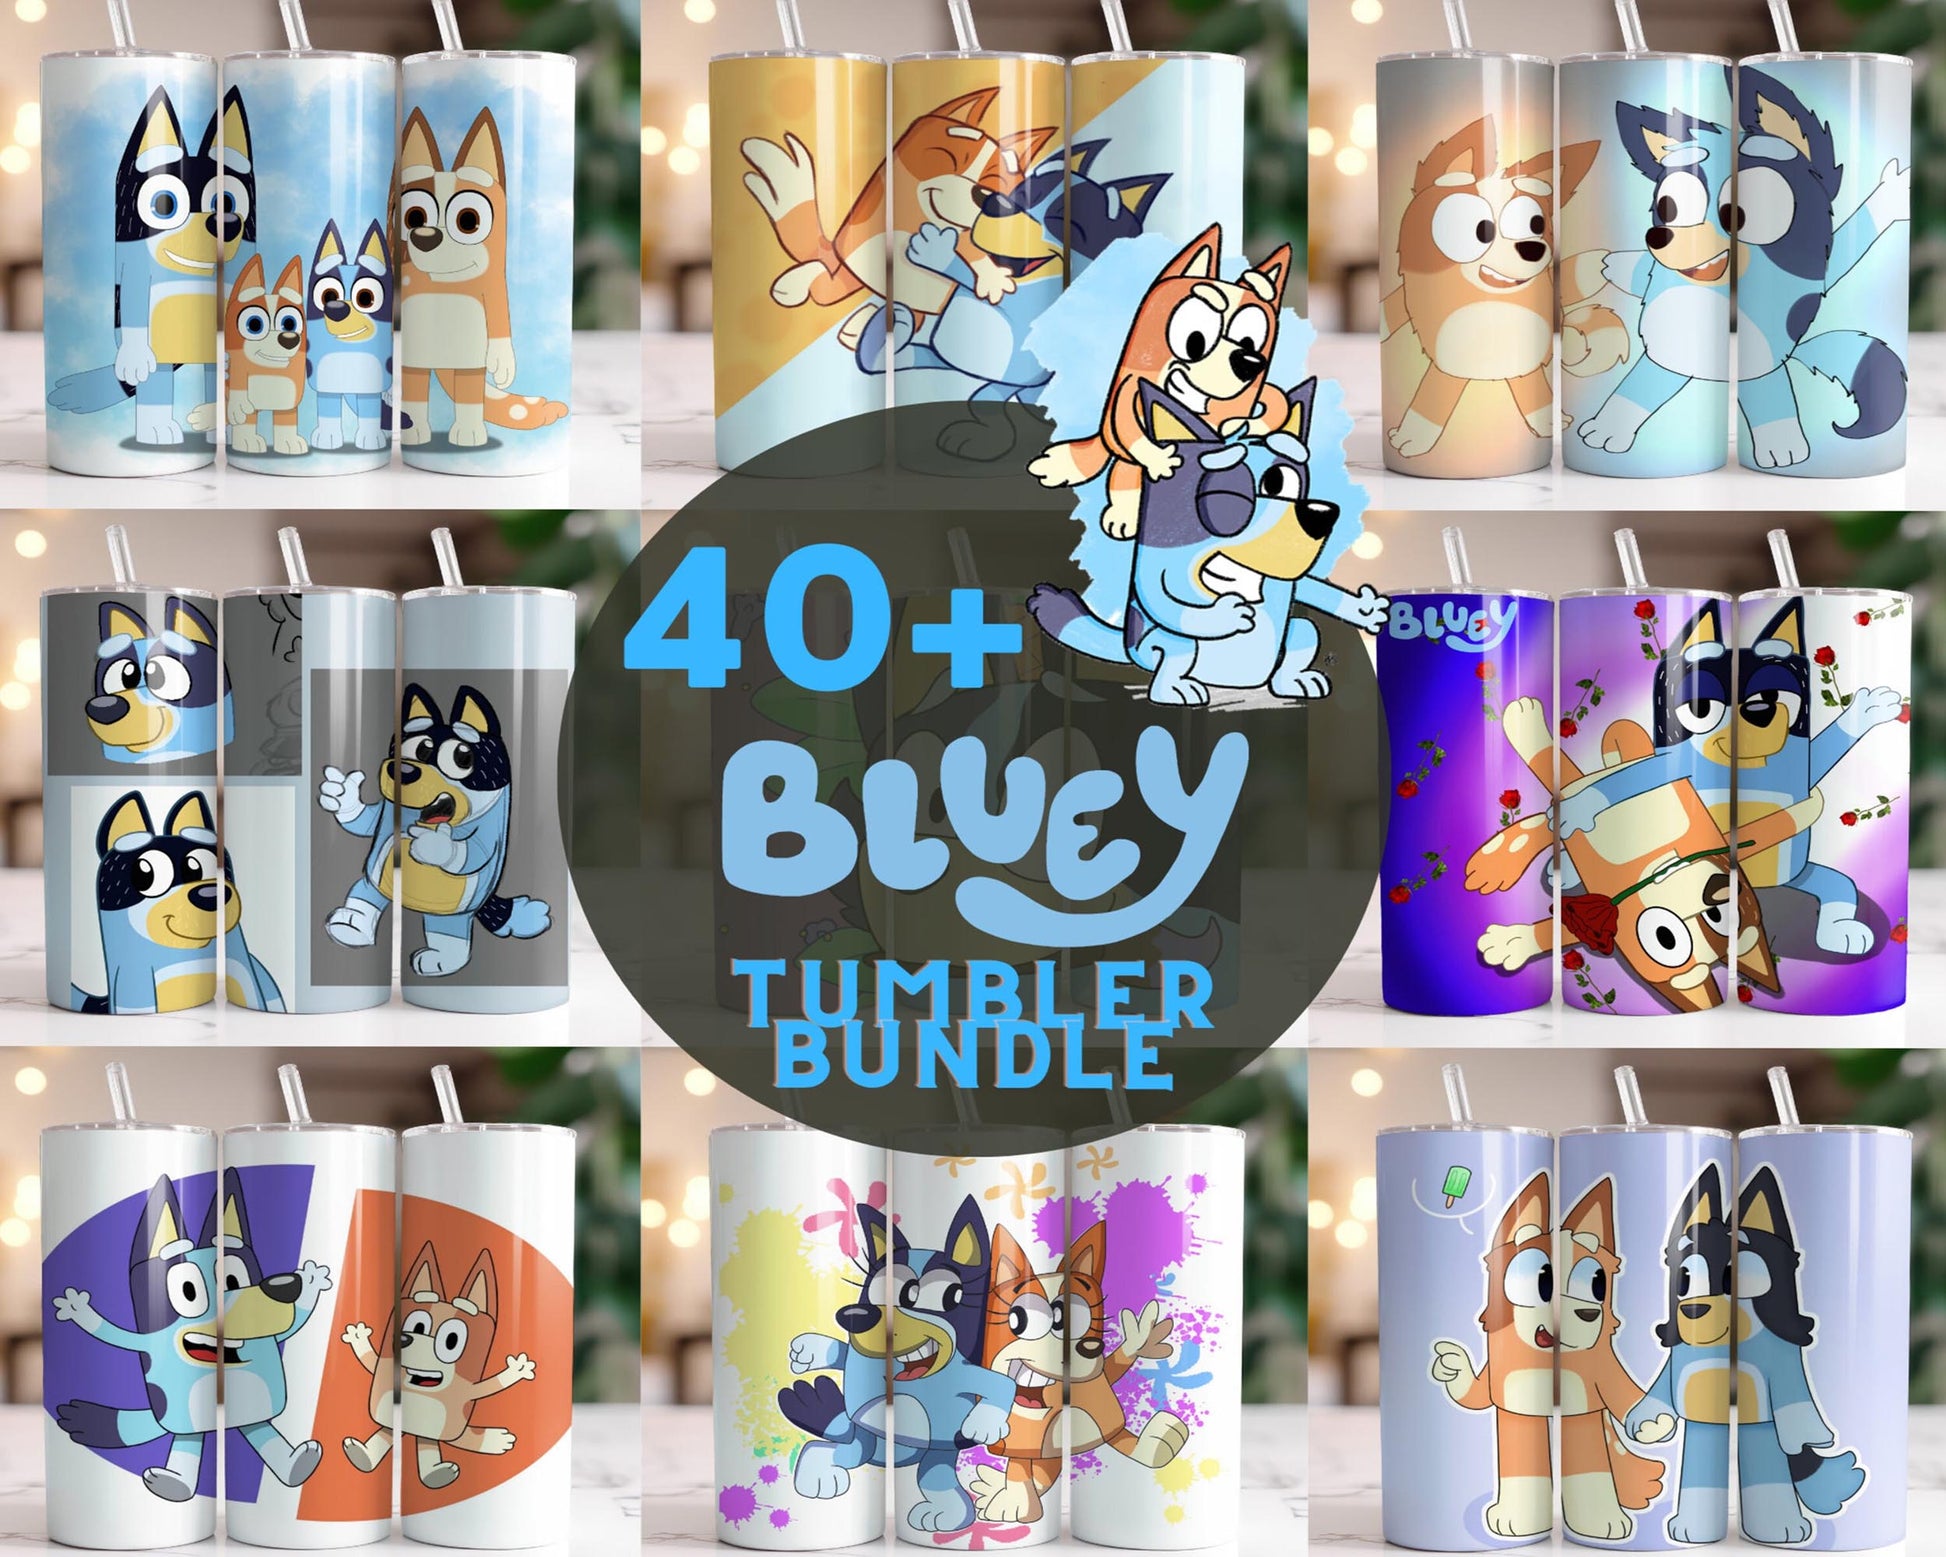 20 Oz Bluey Tumbler Cup Design